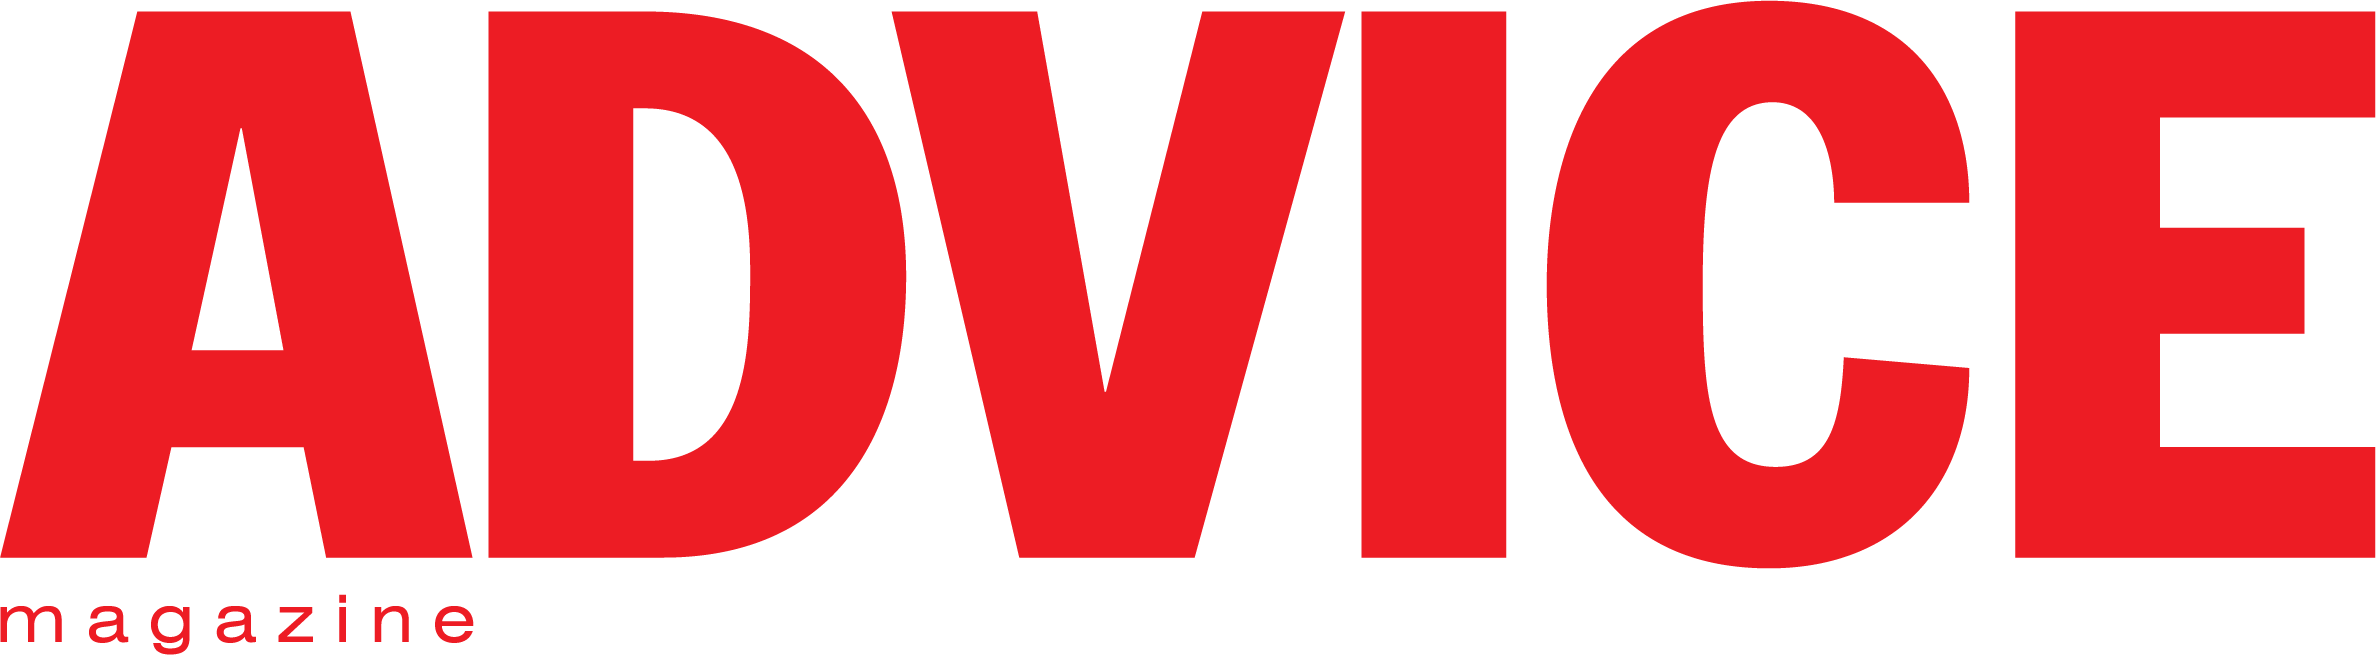 Logo Advice_red